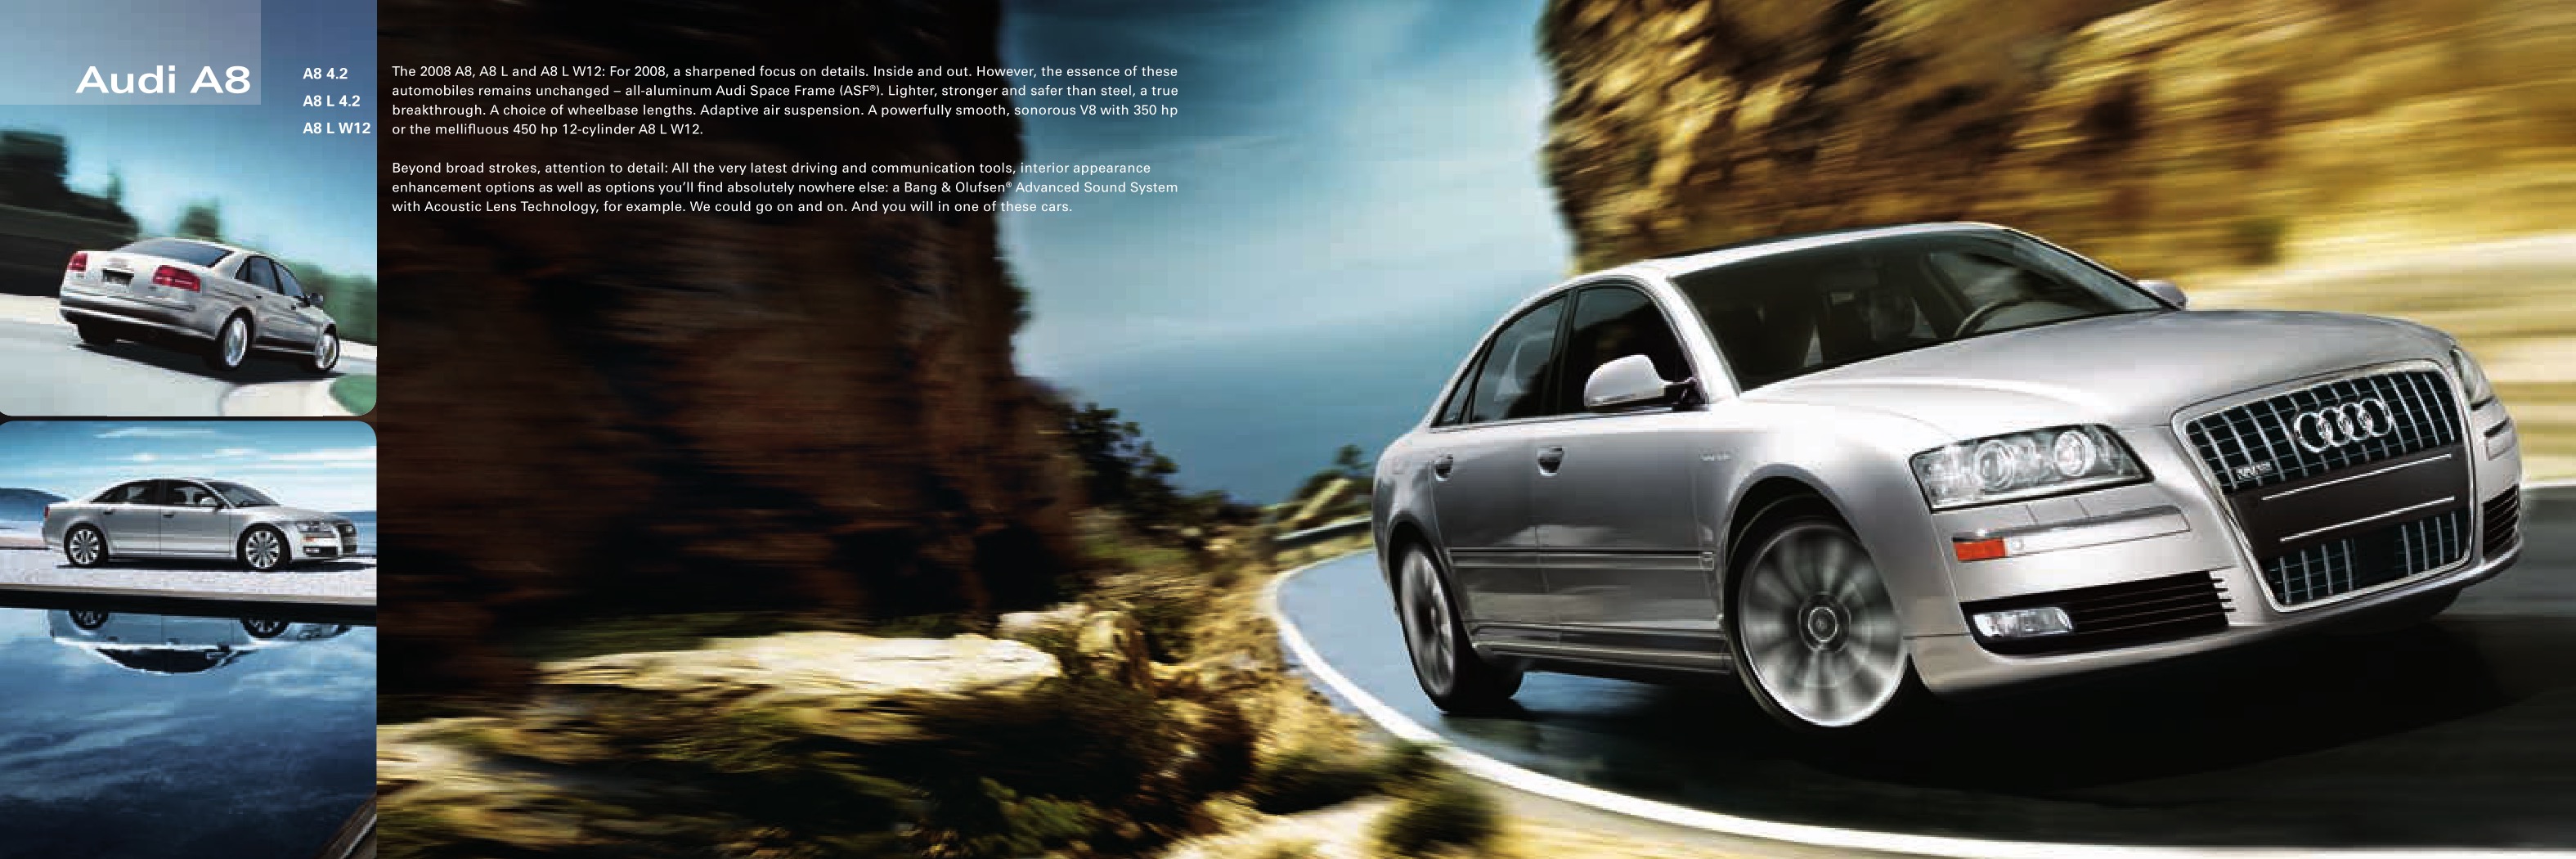 2008 Audi Brochure Page 17